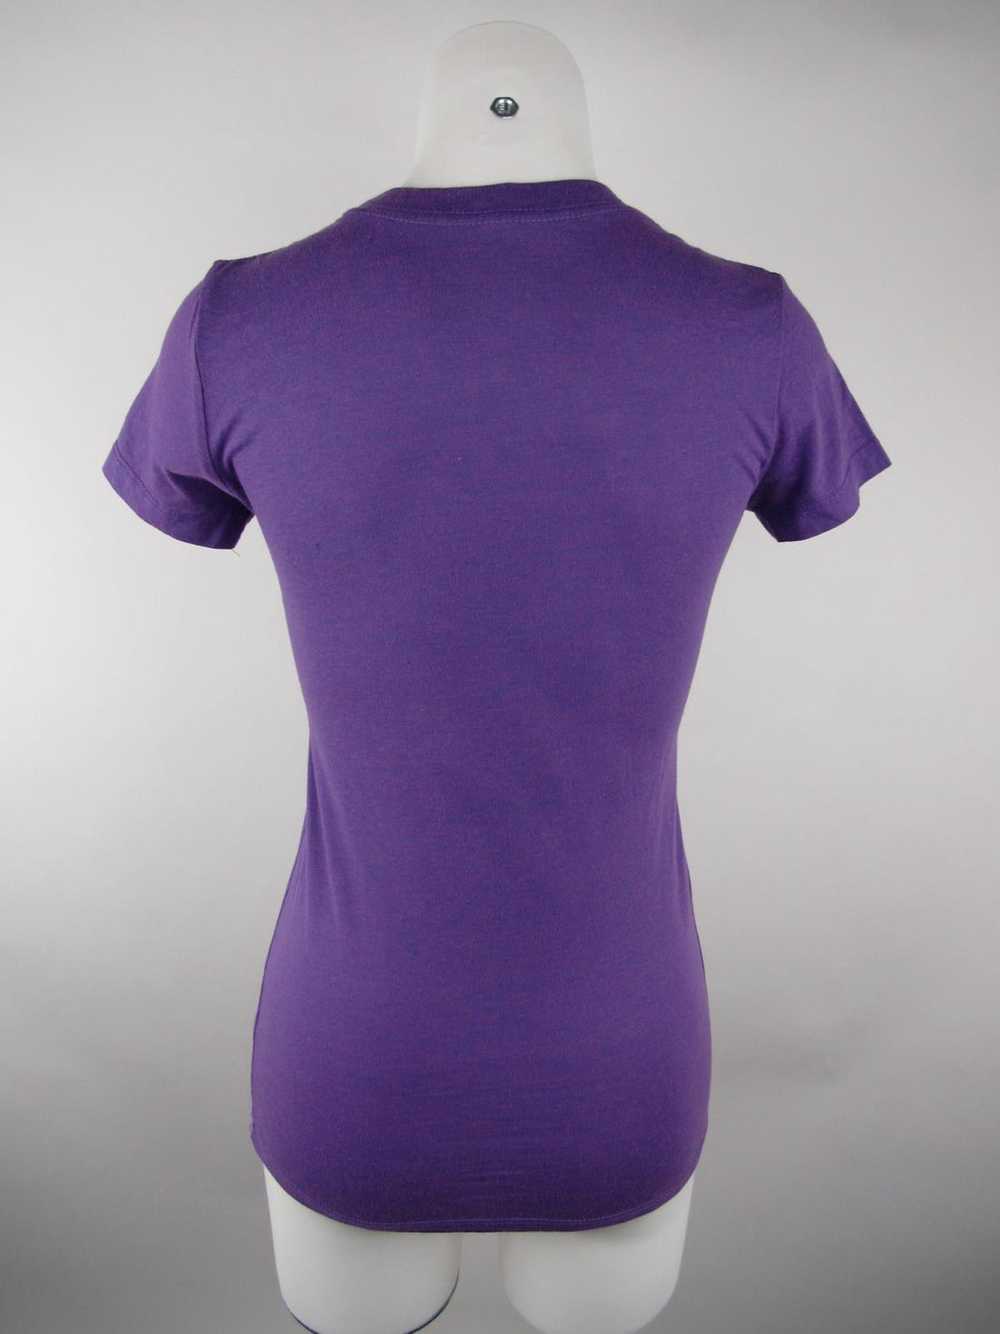 Tie Dye Gravity Ladies Shirt Size M Medium Red Blue Purple